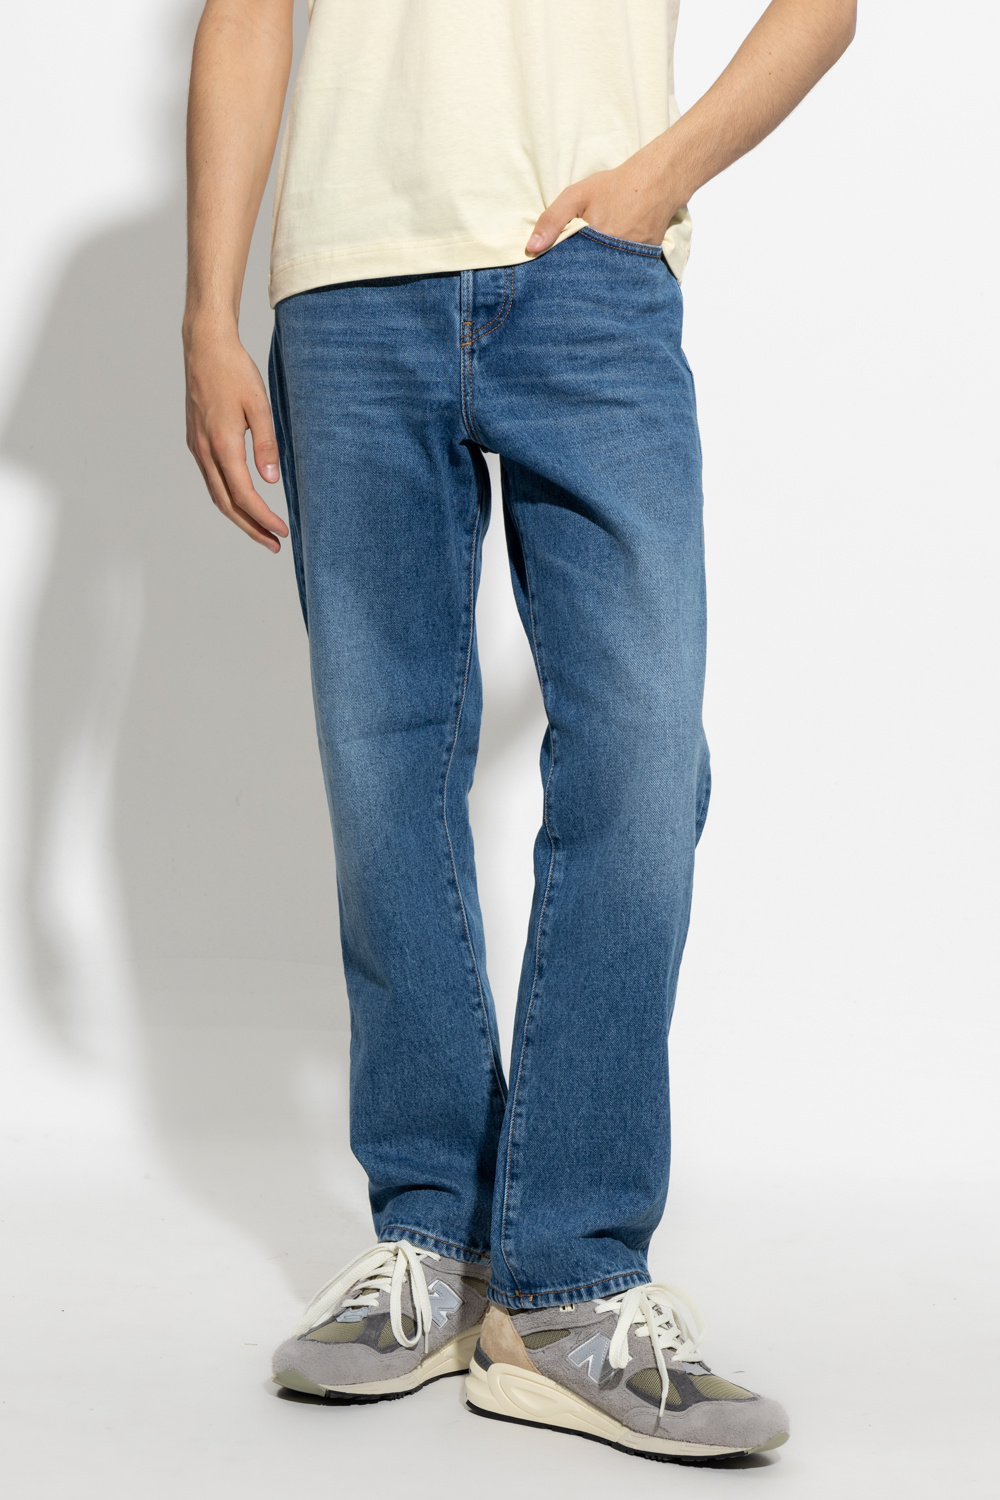 Patterned shorts Zimmermann - Original 501 Jeans - IetpShops Denmark